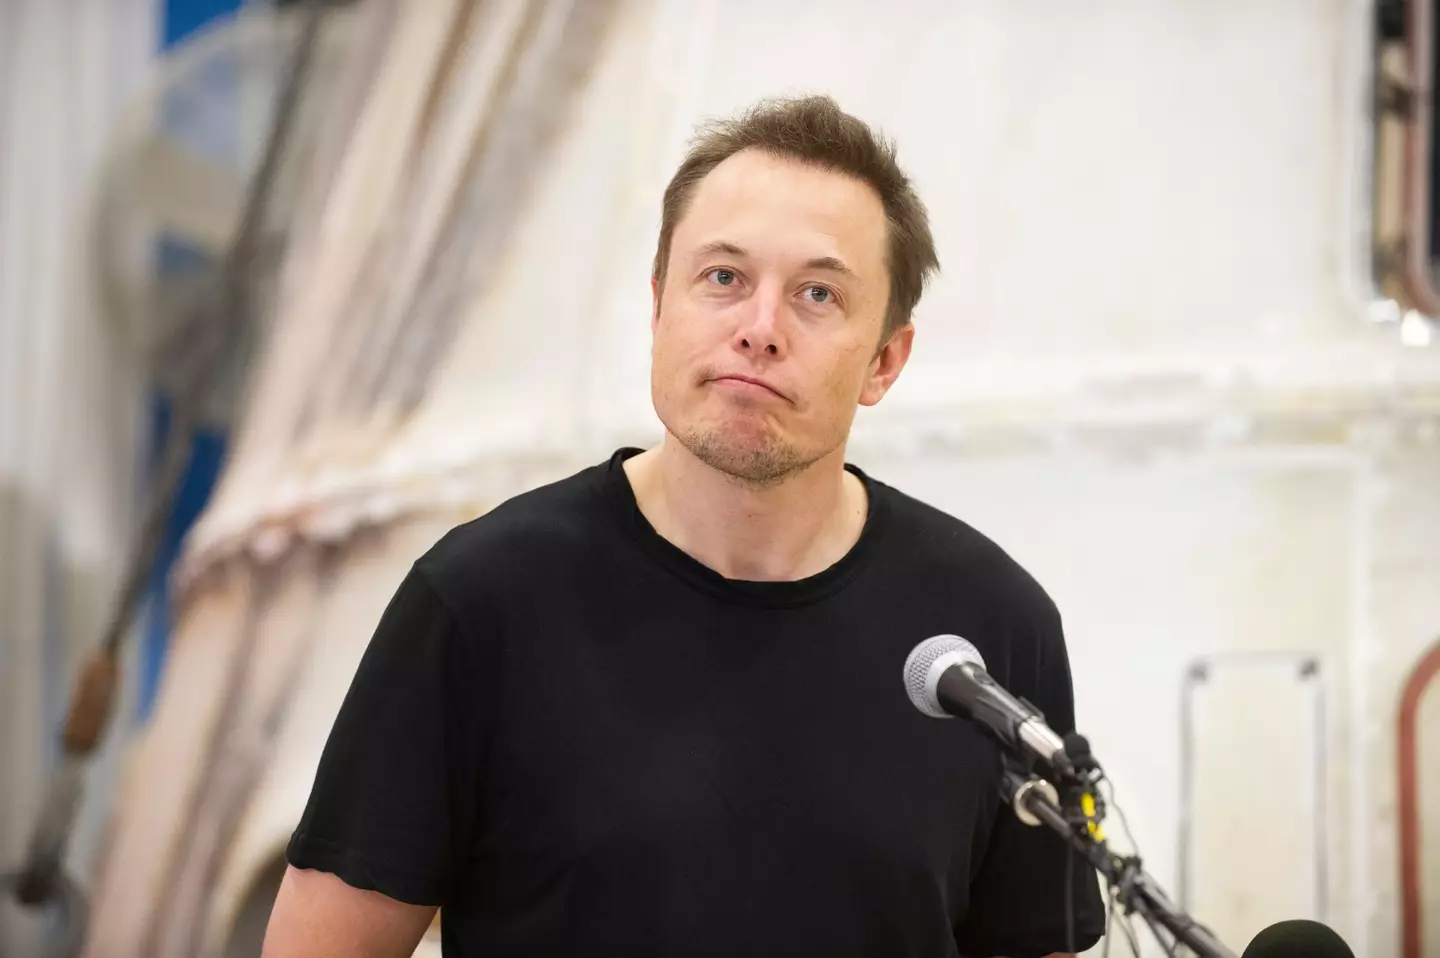 Elon Musk can’t afford to buy Twitter despite his $43 billion bid, according to an NYU professor.